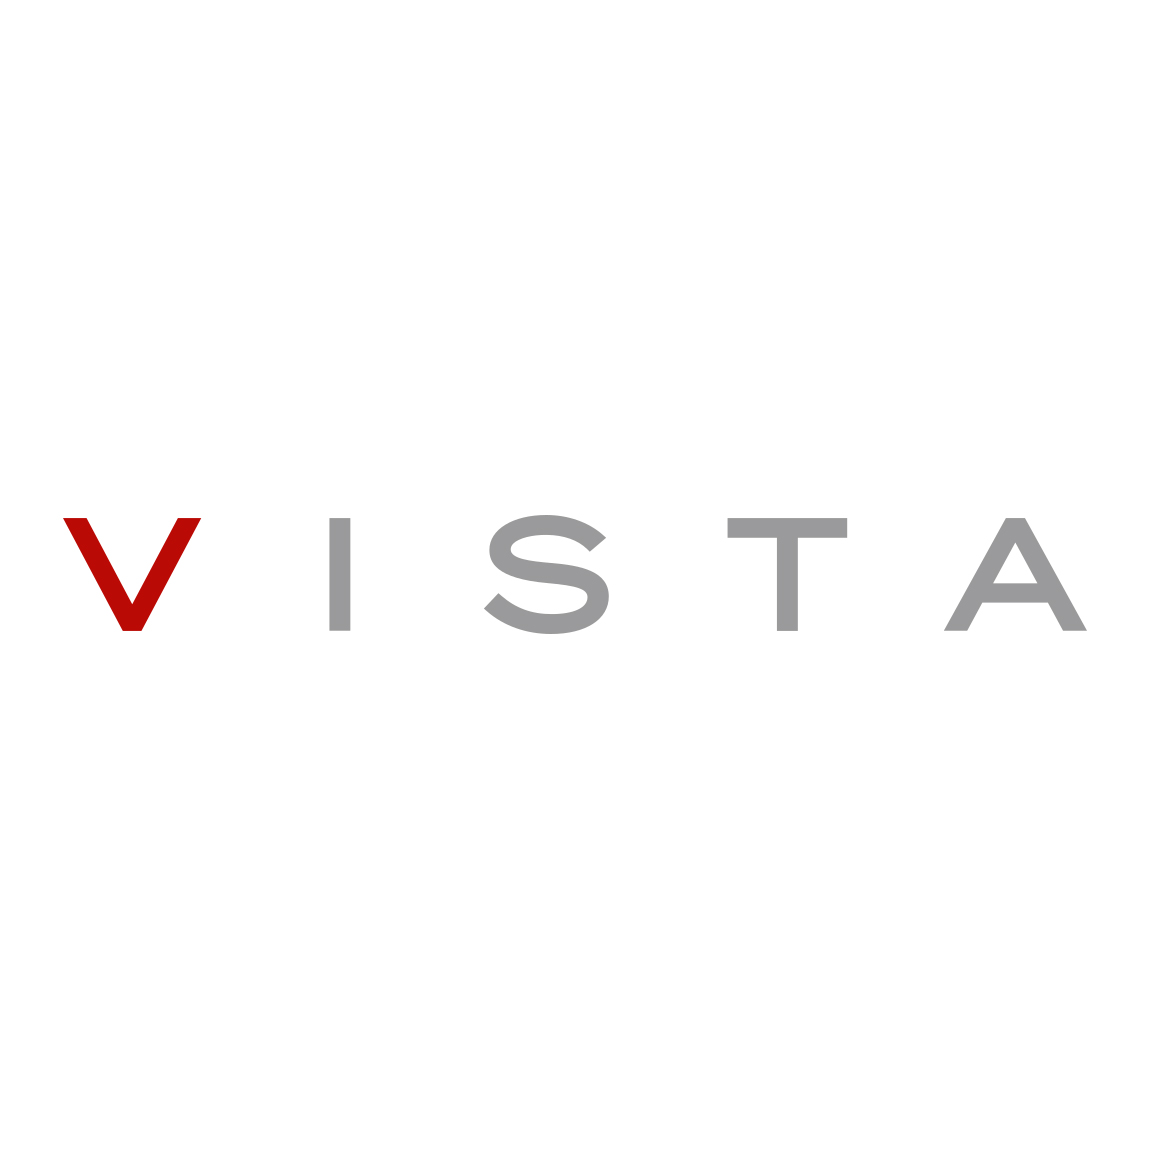 Vista Global logo